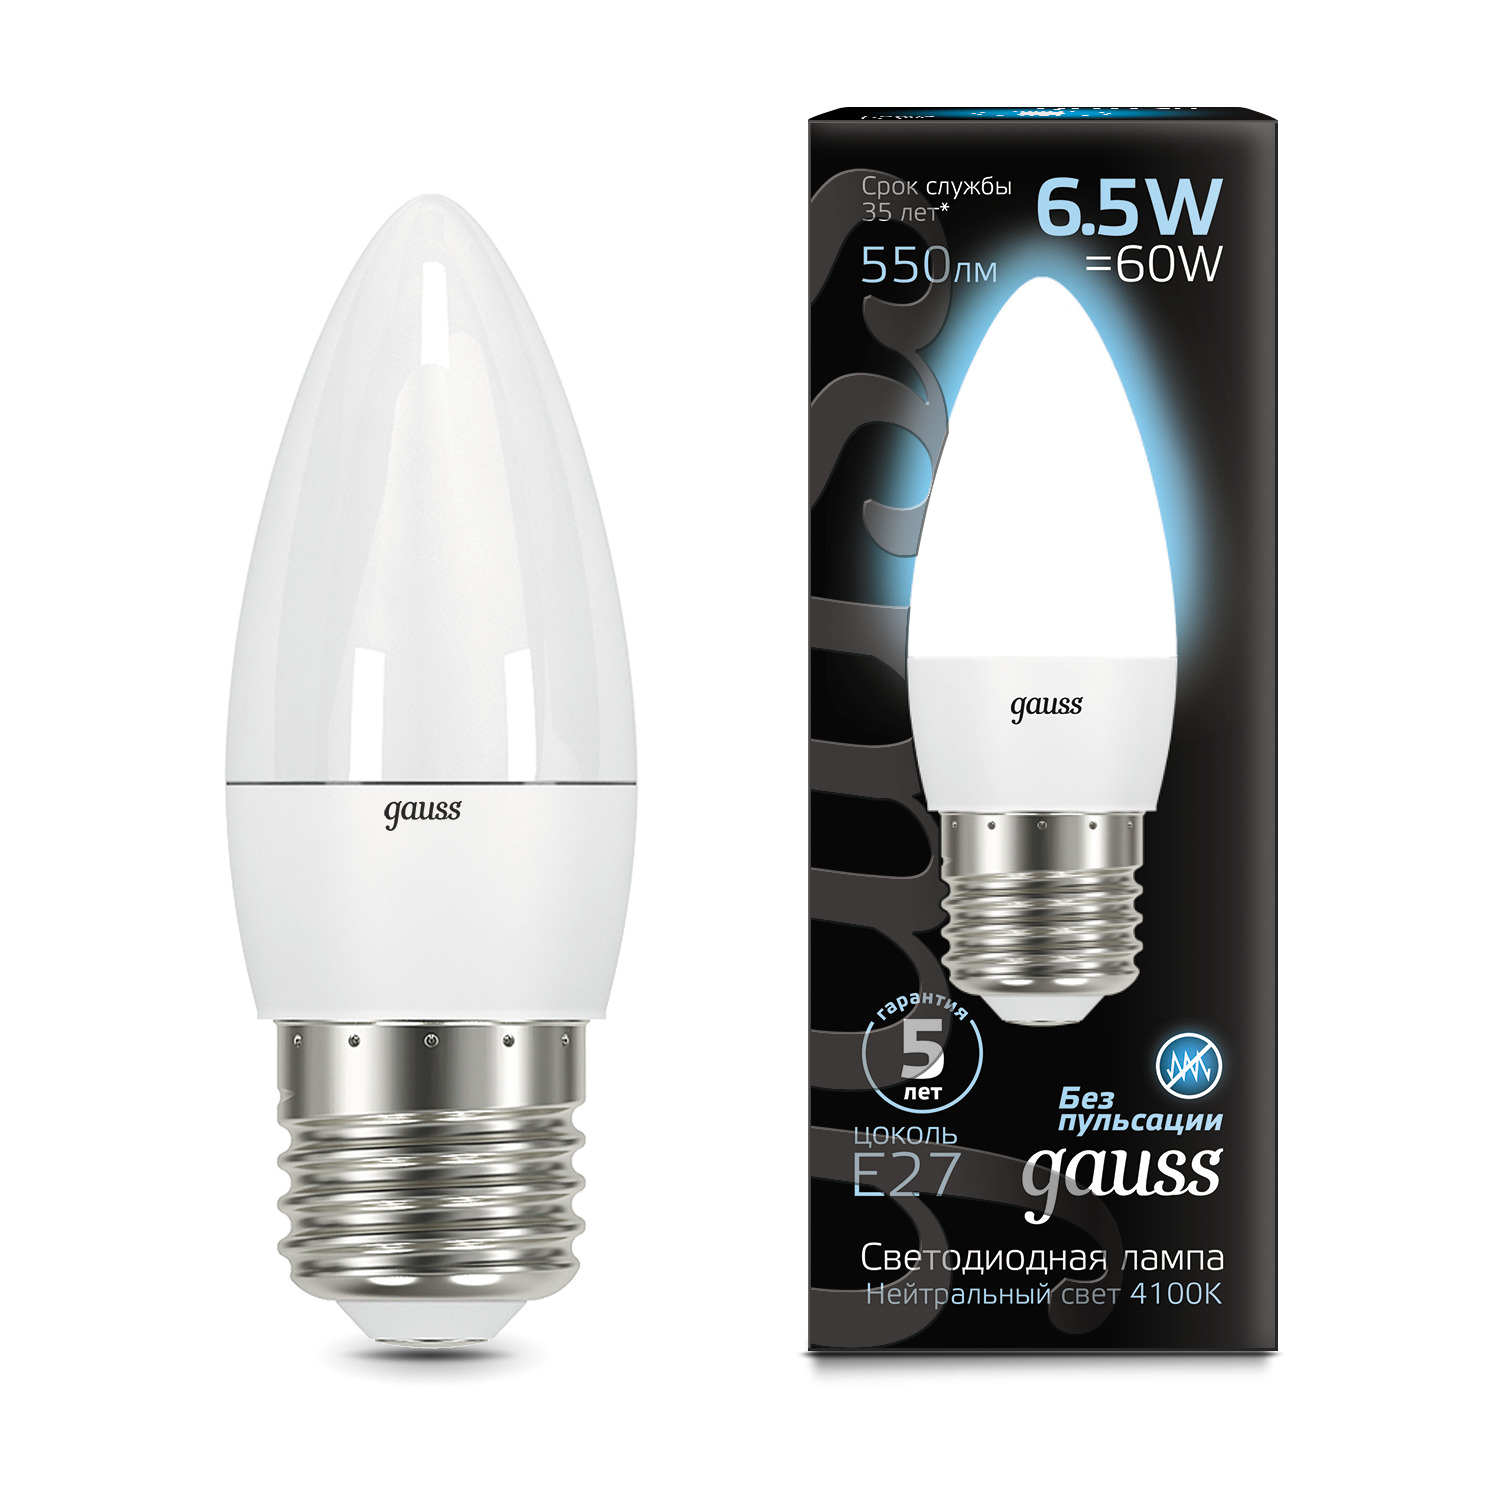 Лампа Gauss LED Candle E27 6.5W 4100К gauss led candle e27 6 5w 4100к 1 10 50